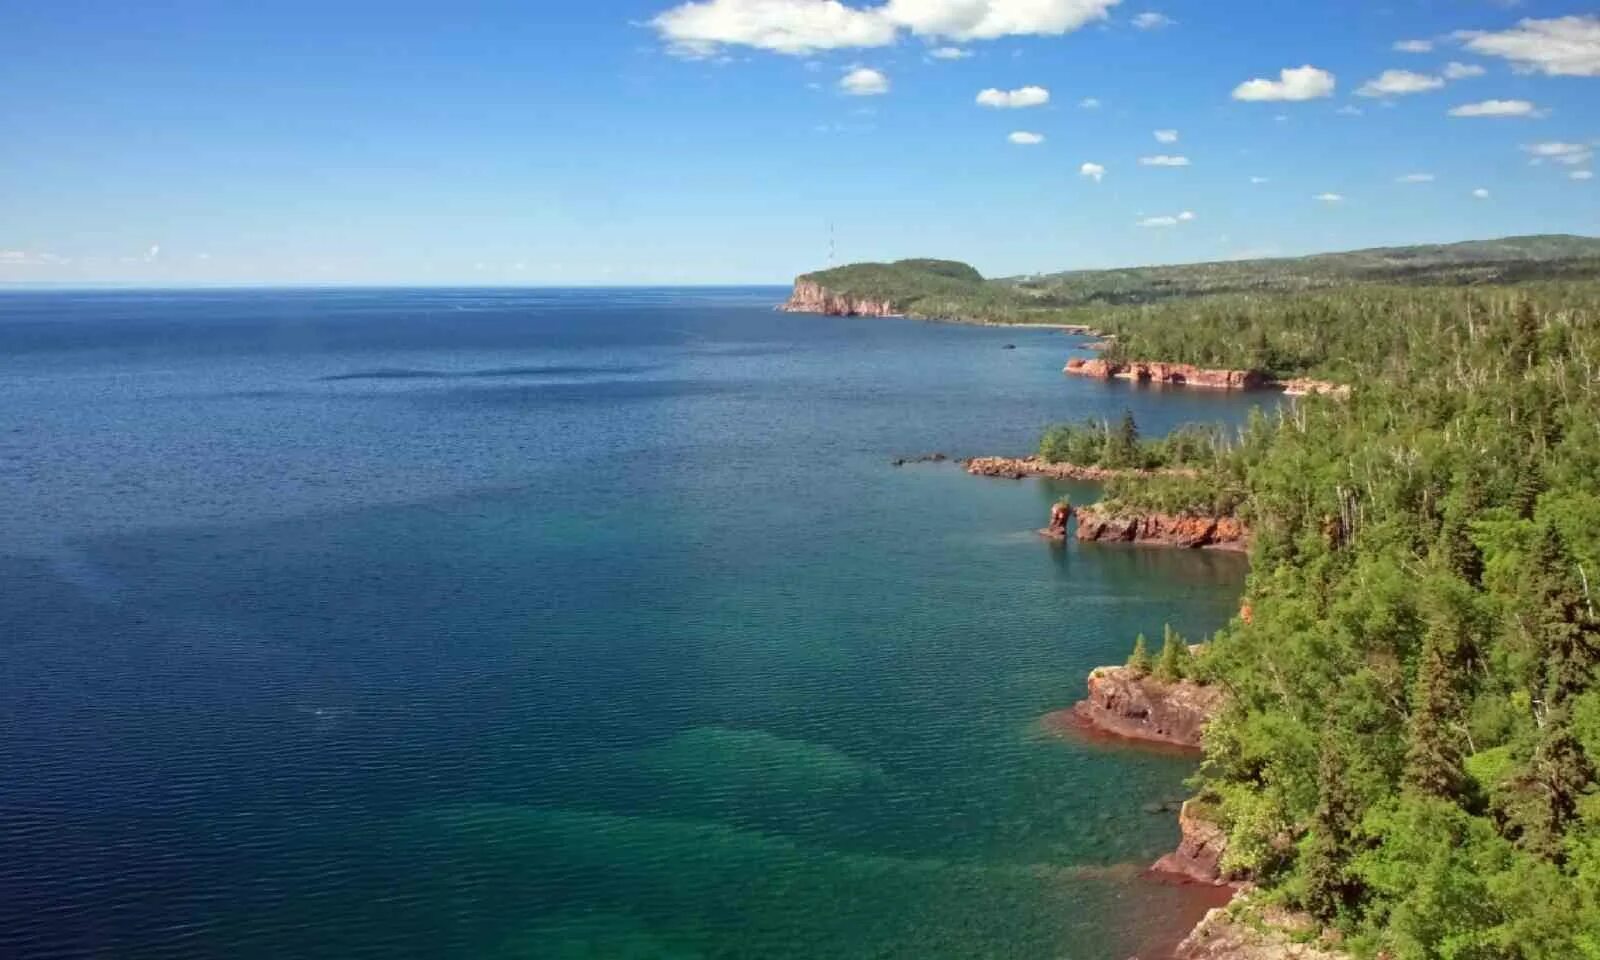 Какие озера входят в великие американские озера. Верхнее (Lake Superior) — озеро. Озеро Гурон Северная Америка. Великие американские озёра верхнее Гурон Мичиган Эри Онтарио. Озеро Супериор США.